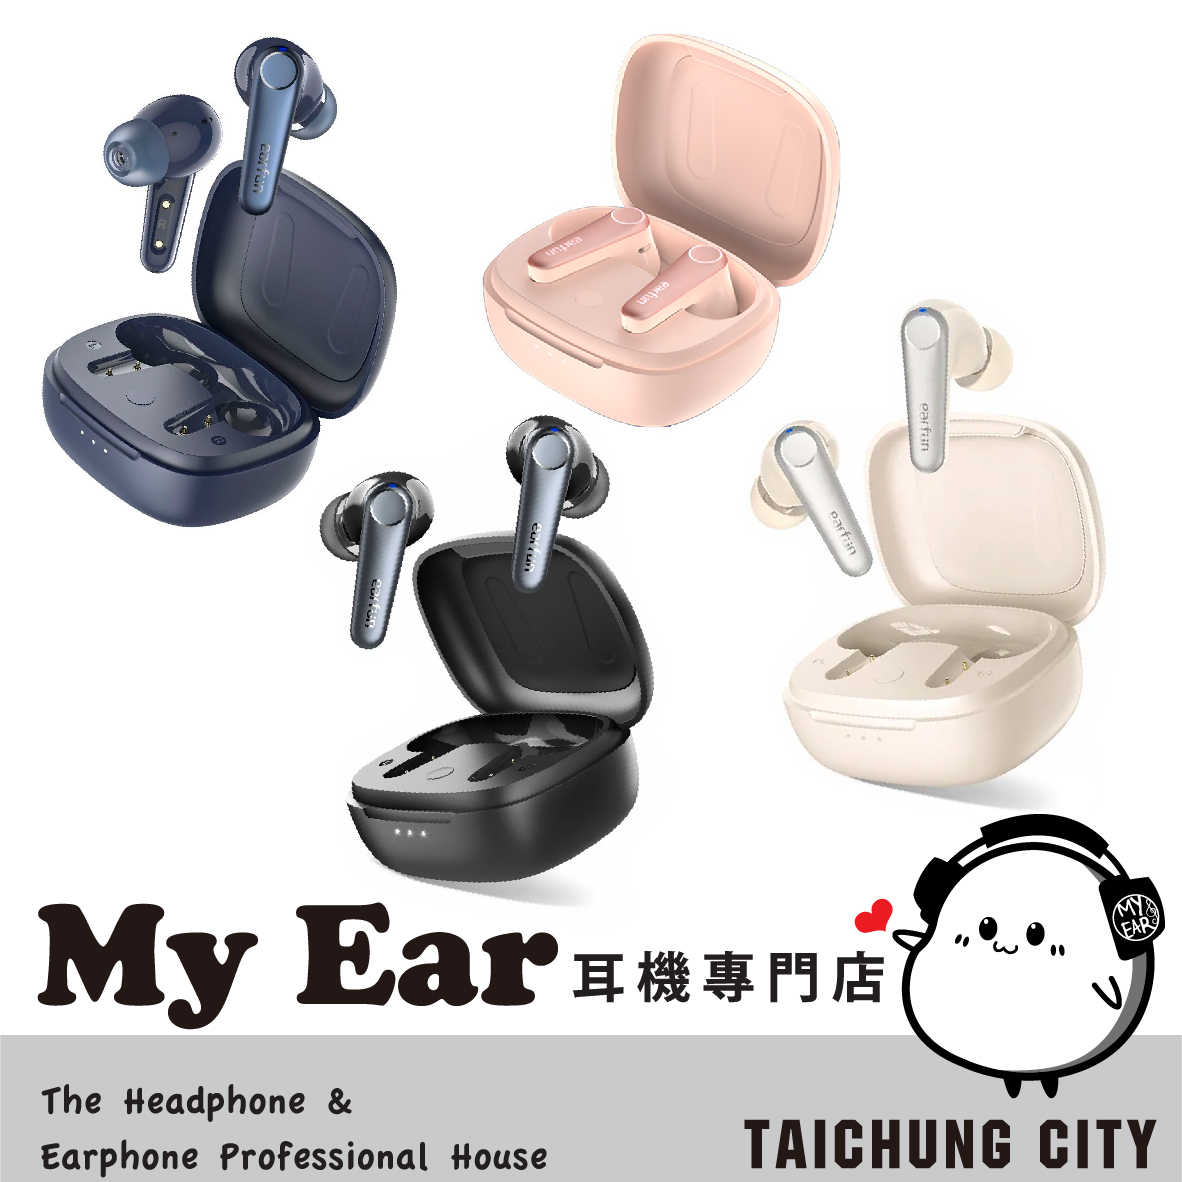 EarFun Air Pro 3 降噪真無線藍牙耳機